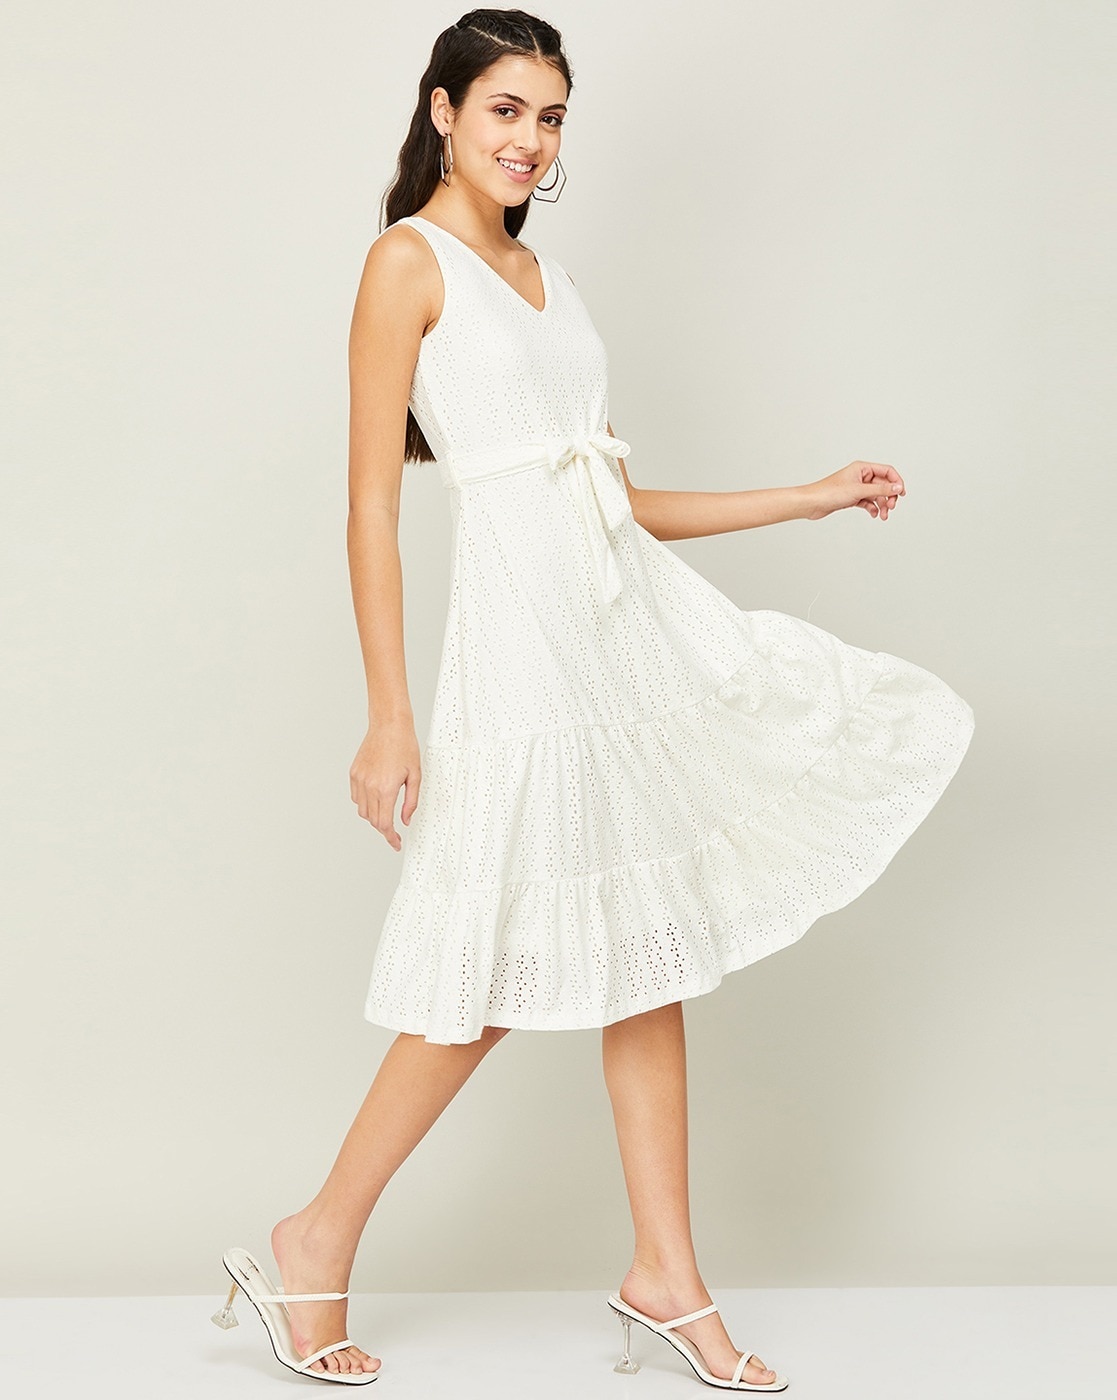 Off White Self Design Dress - Selling Fast at Pantaloons.com